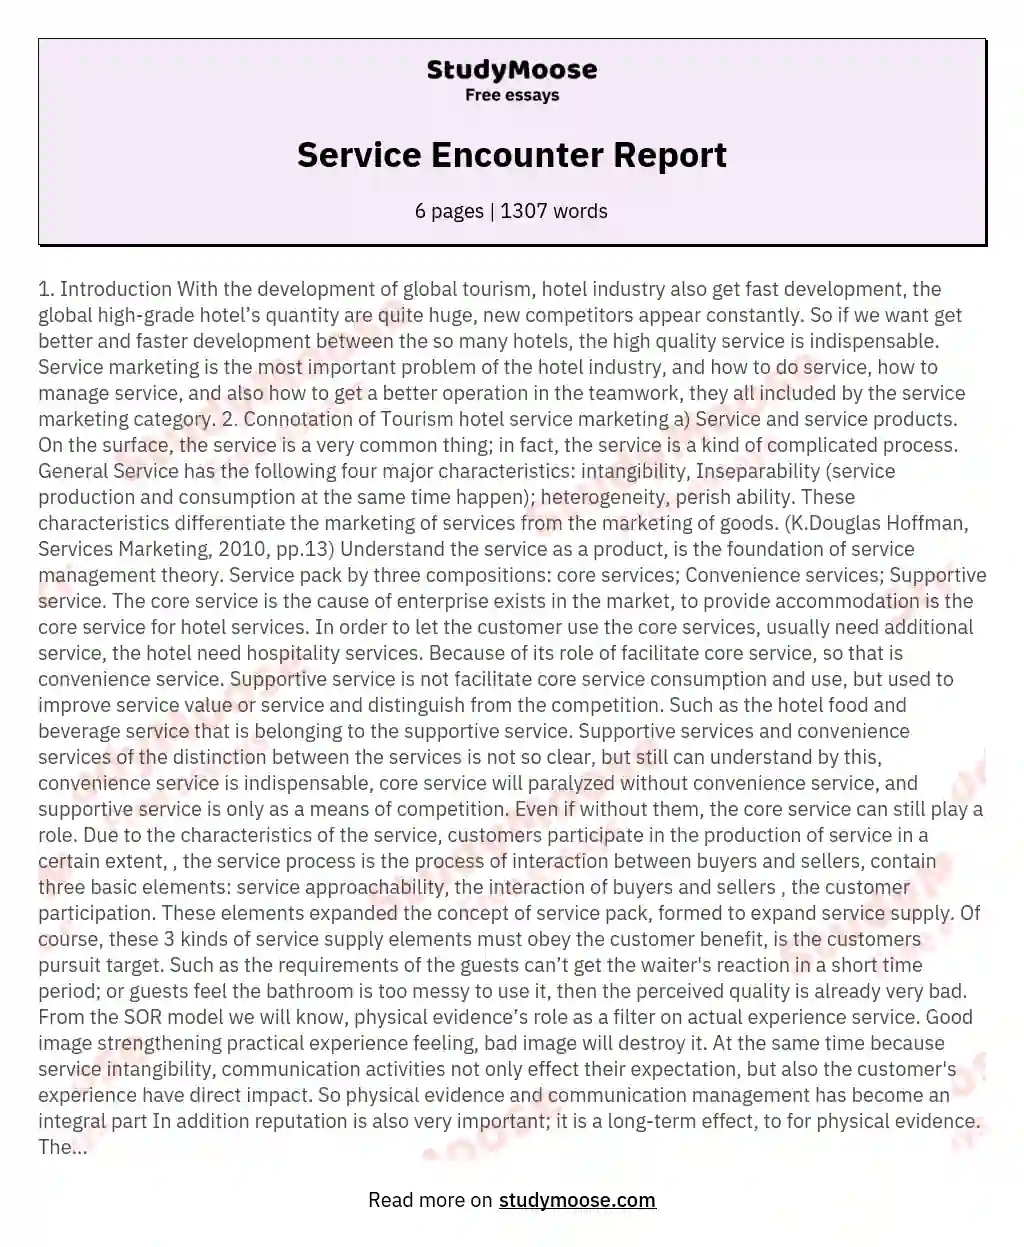 Service Encounter Report essay